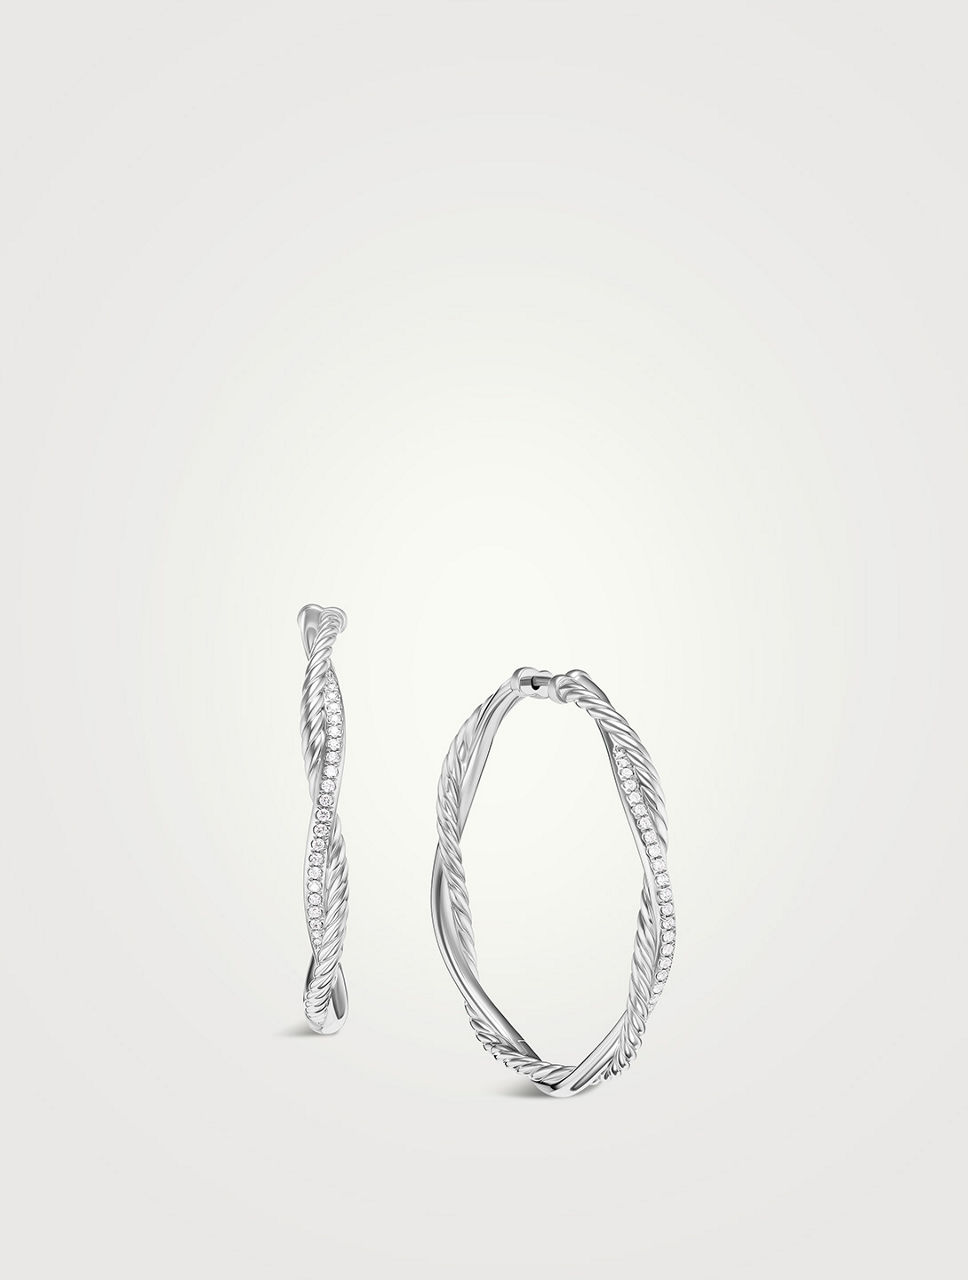 Petite Infinity Hoop Earrings In Sterling Silver With Pavé Diamonds